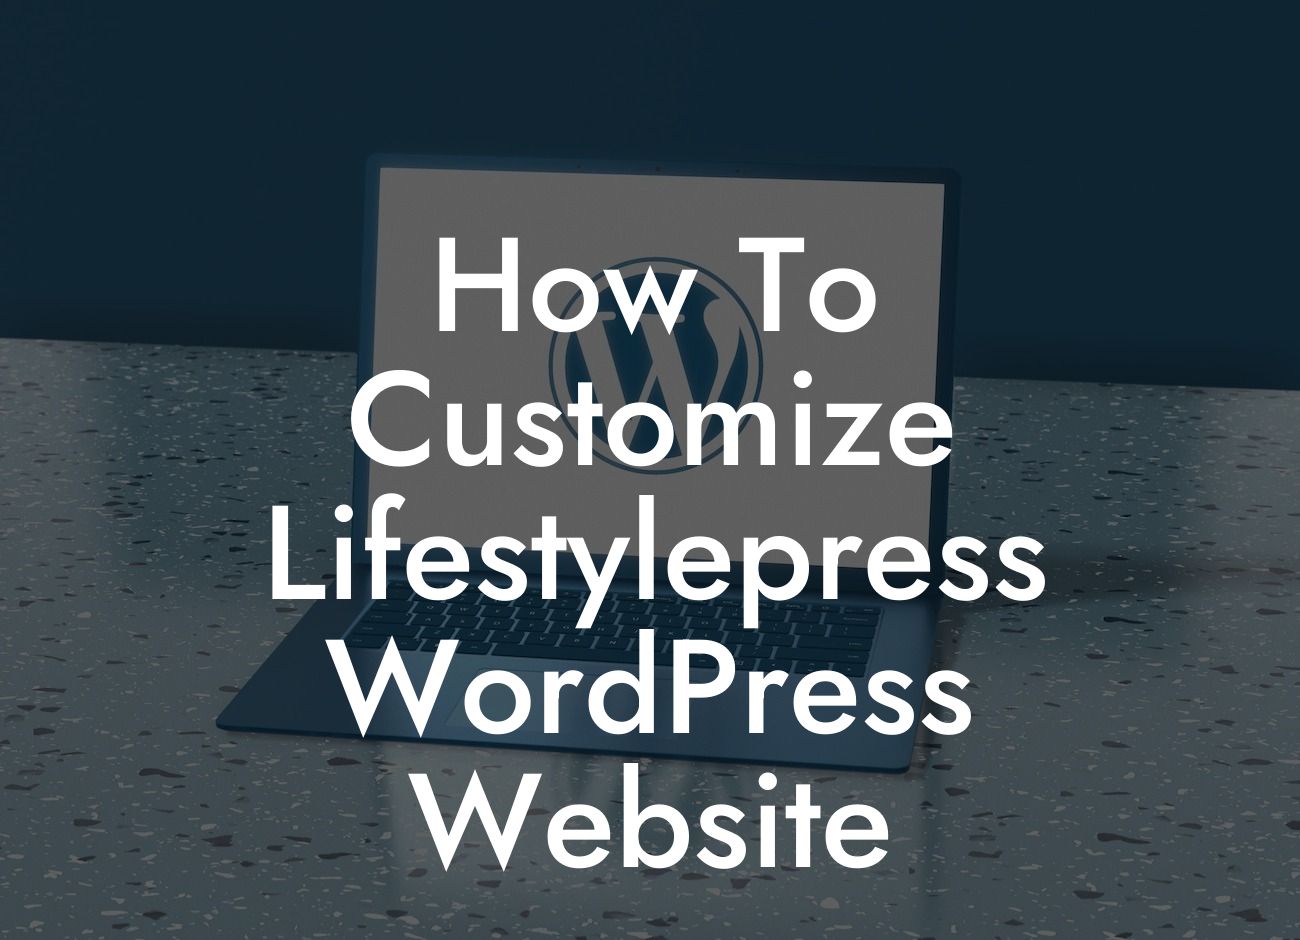 How To Customize Lifestylepress WordPress Website